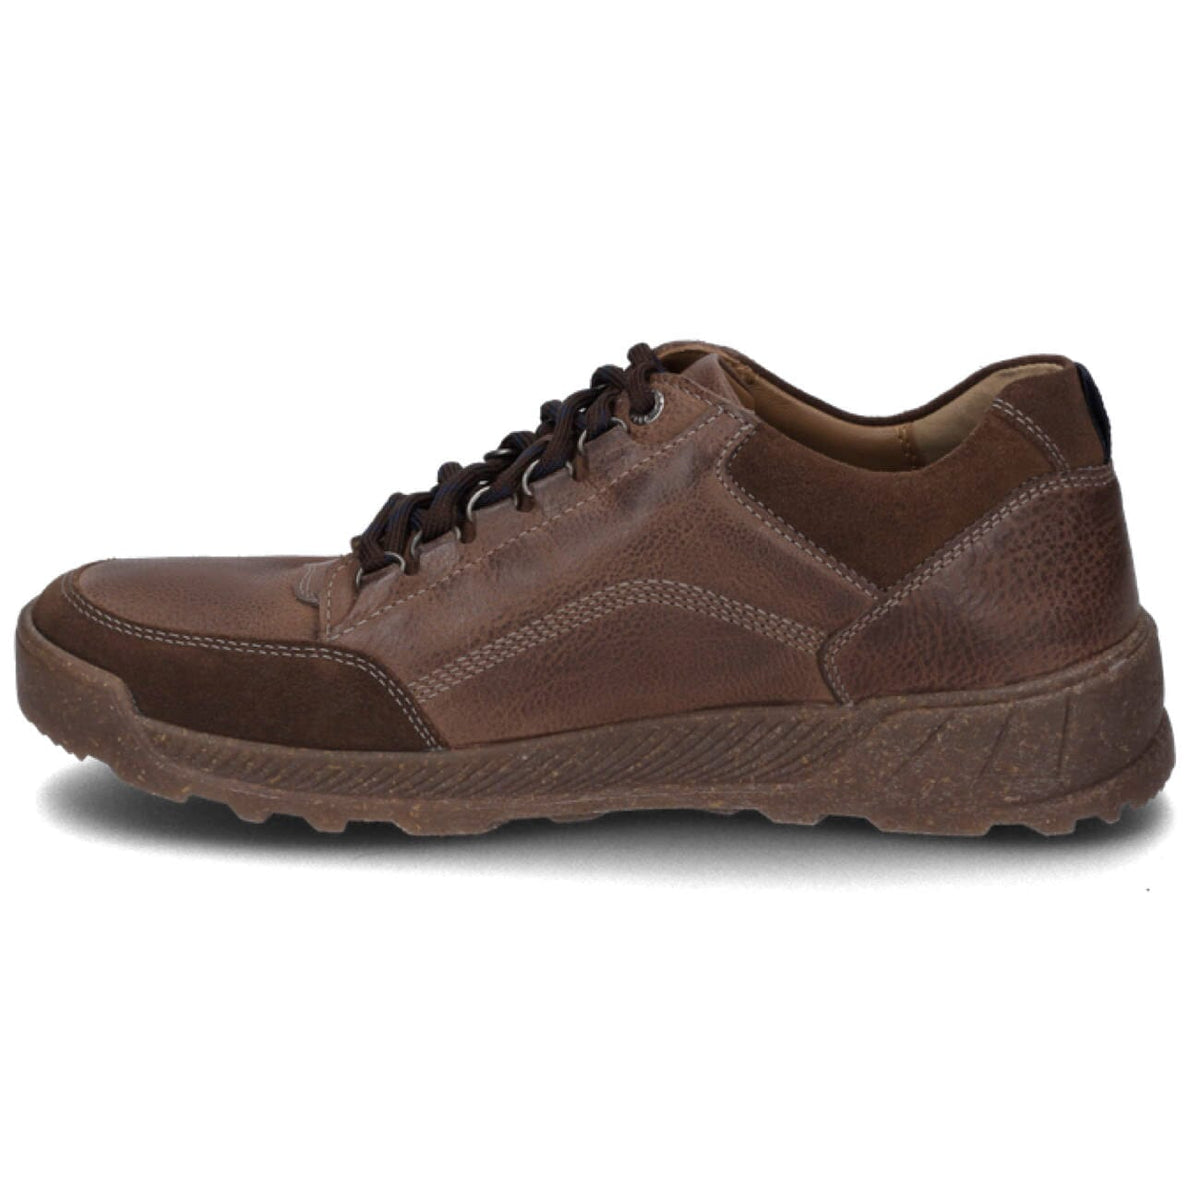 Josef Seibel, Raymond 01, Shoes, Leather, Braun Shoes Josef Seibel 